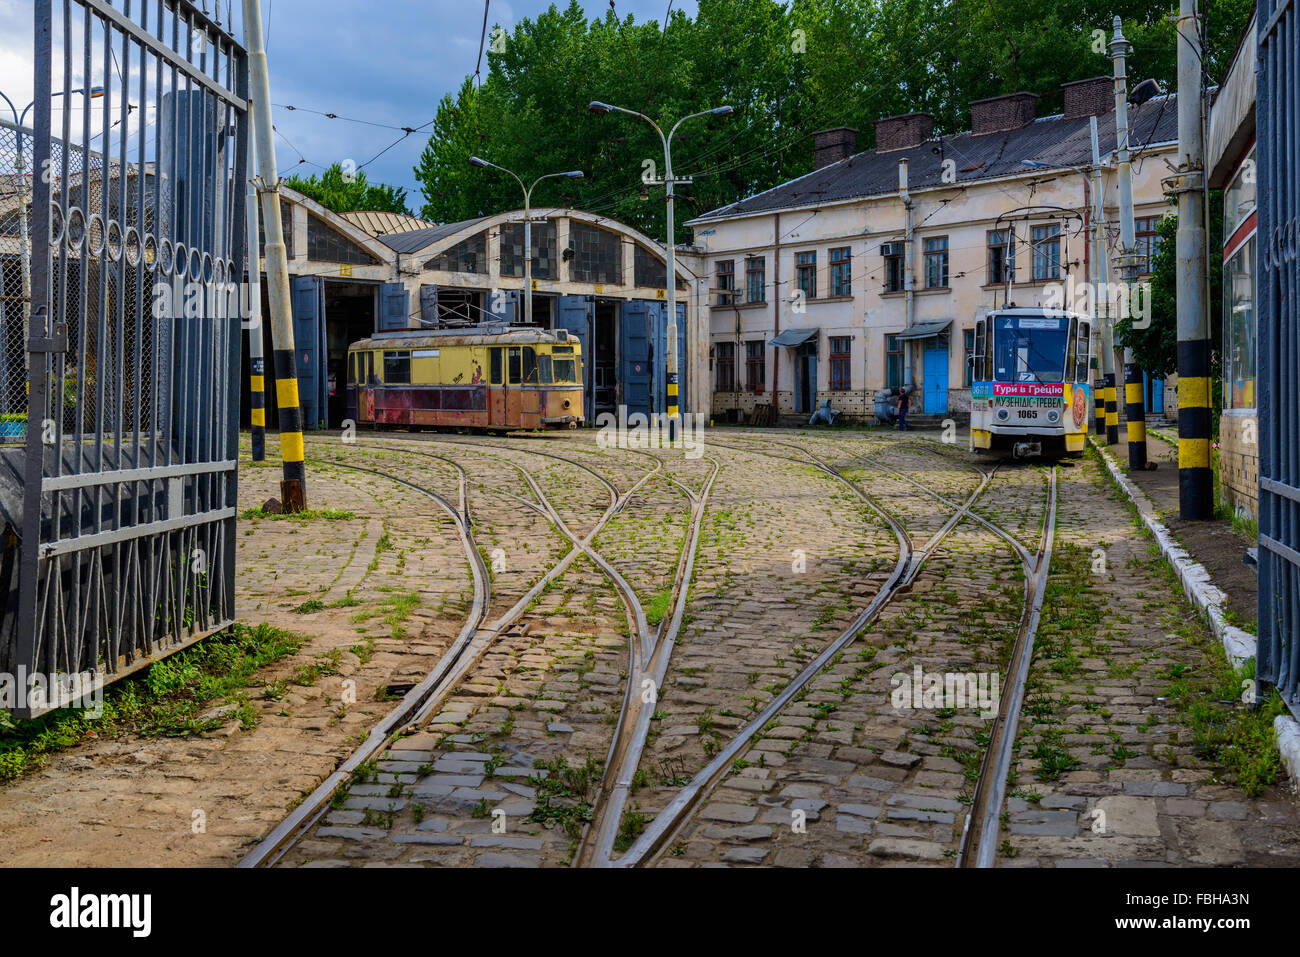 A tram depot in Lviv, Ukraine Stock Photo